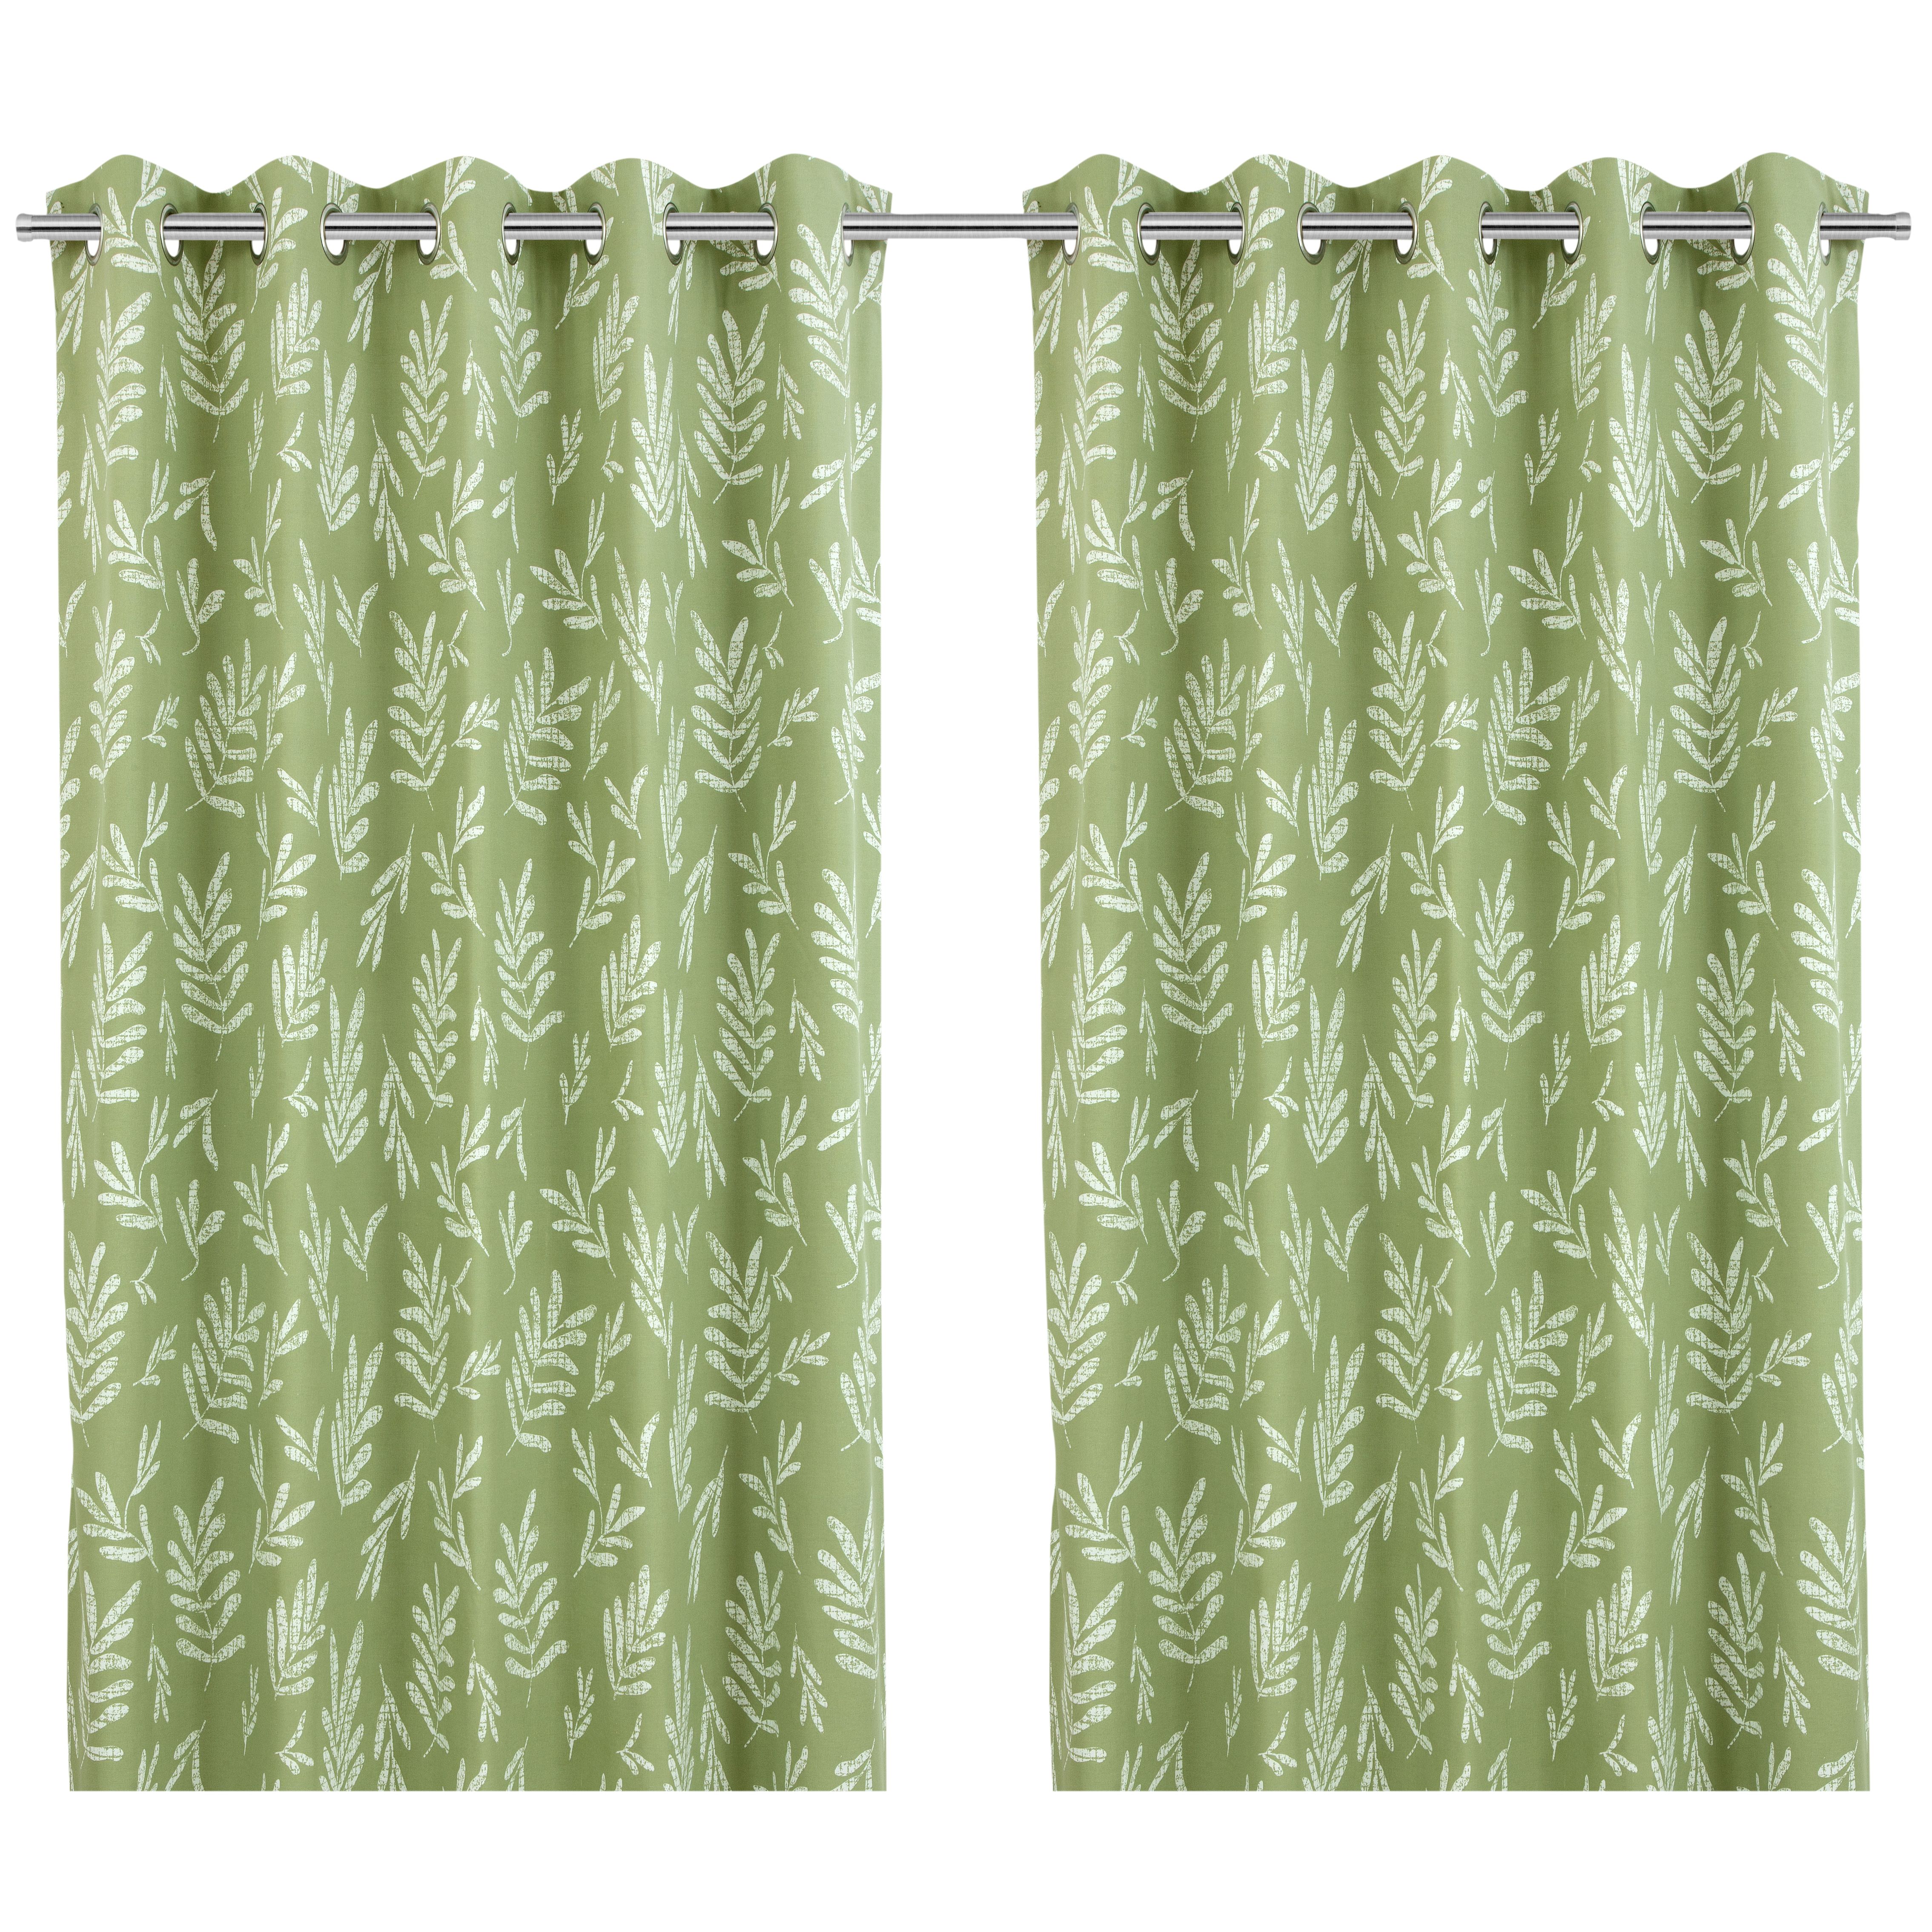 Nedin Light green Printed leaves Lined Eyelet Curtain (W)167cm (L)183cm, Pair